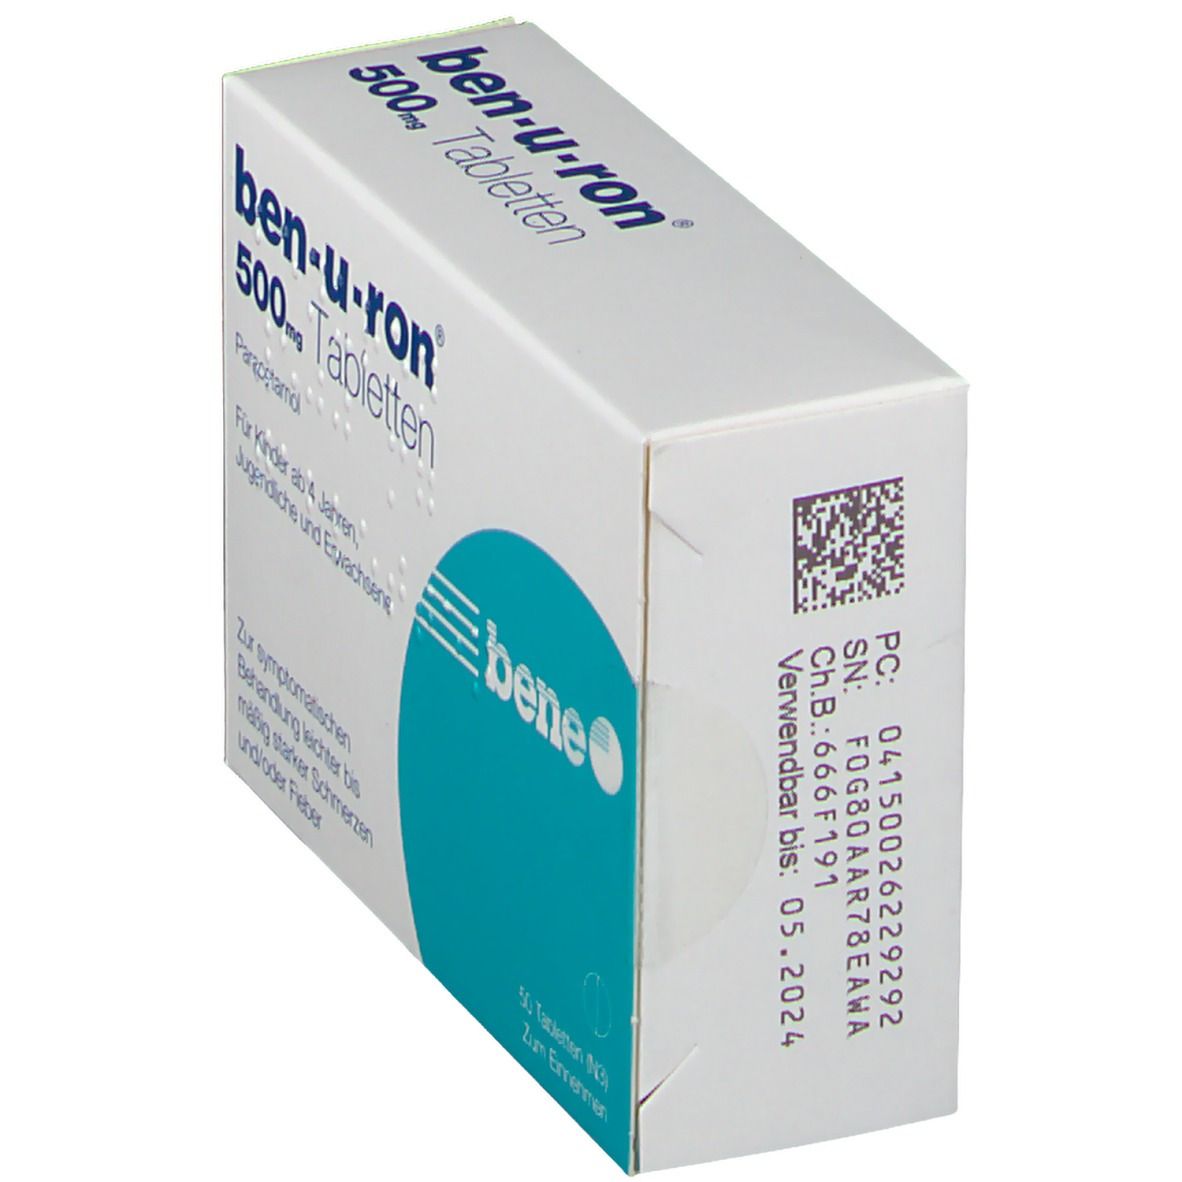 ben-u-ron® 500 mg